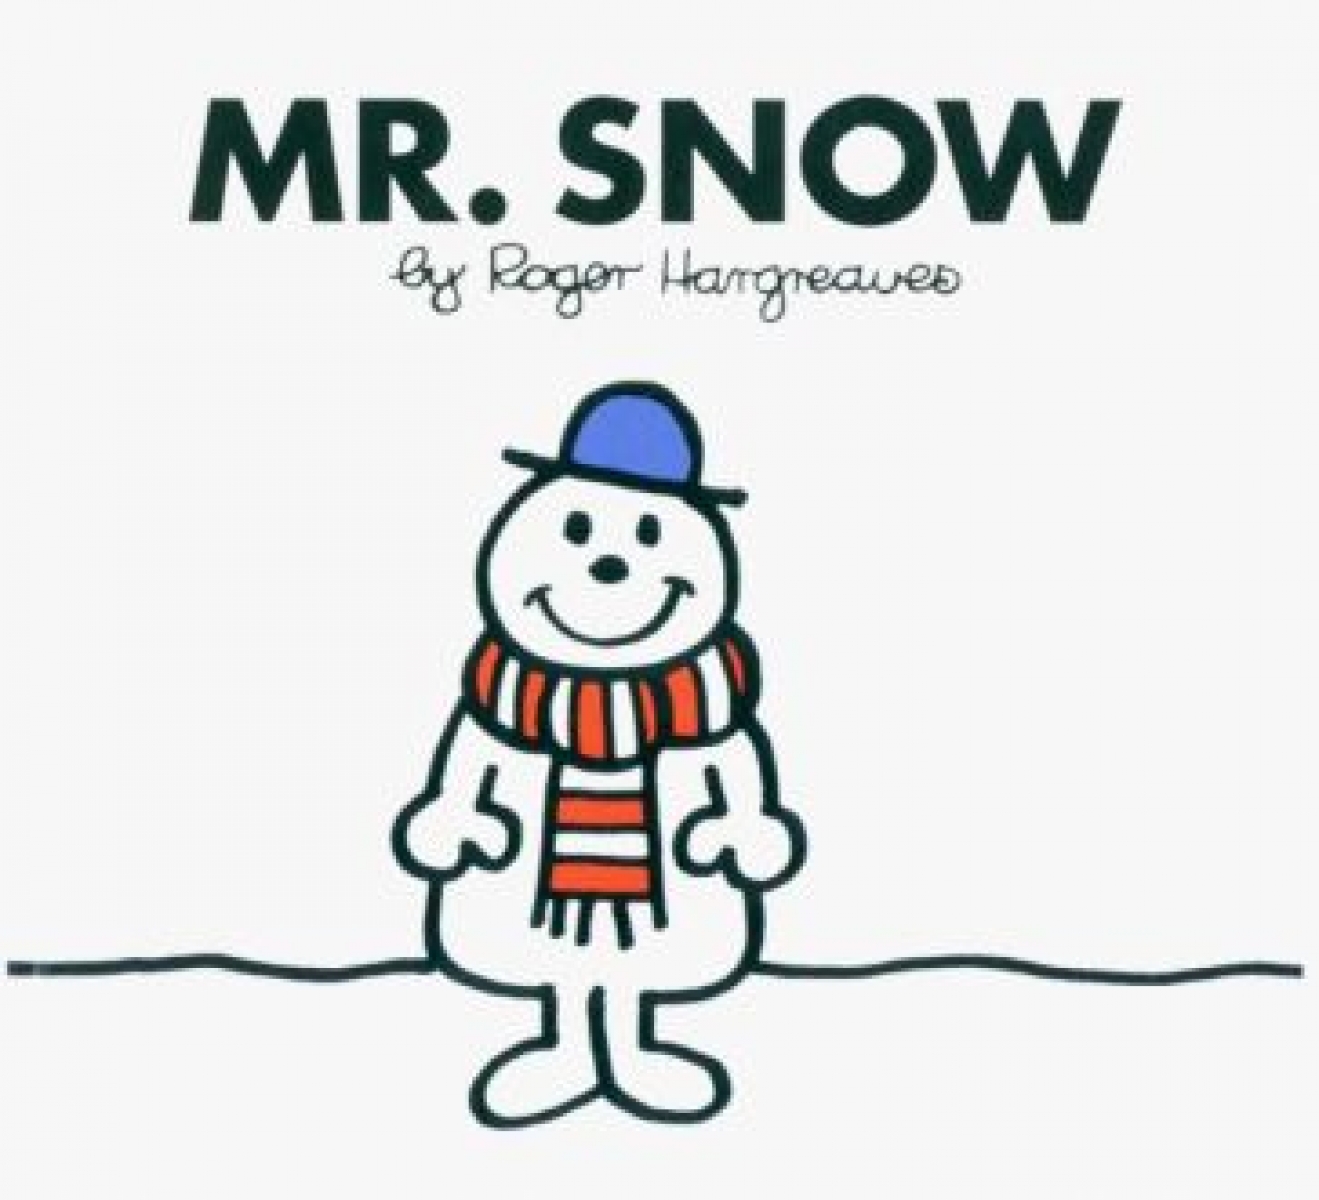 Hargreaves Roger Mr. Snow 